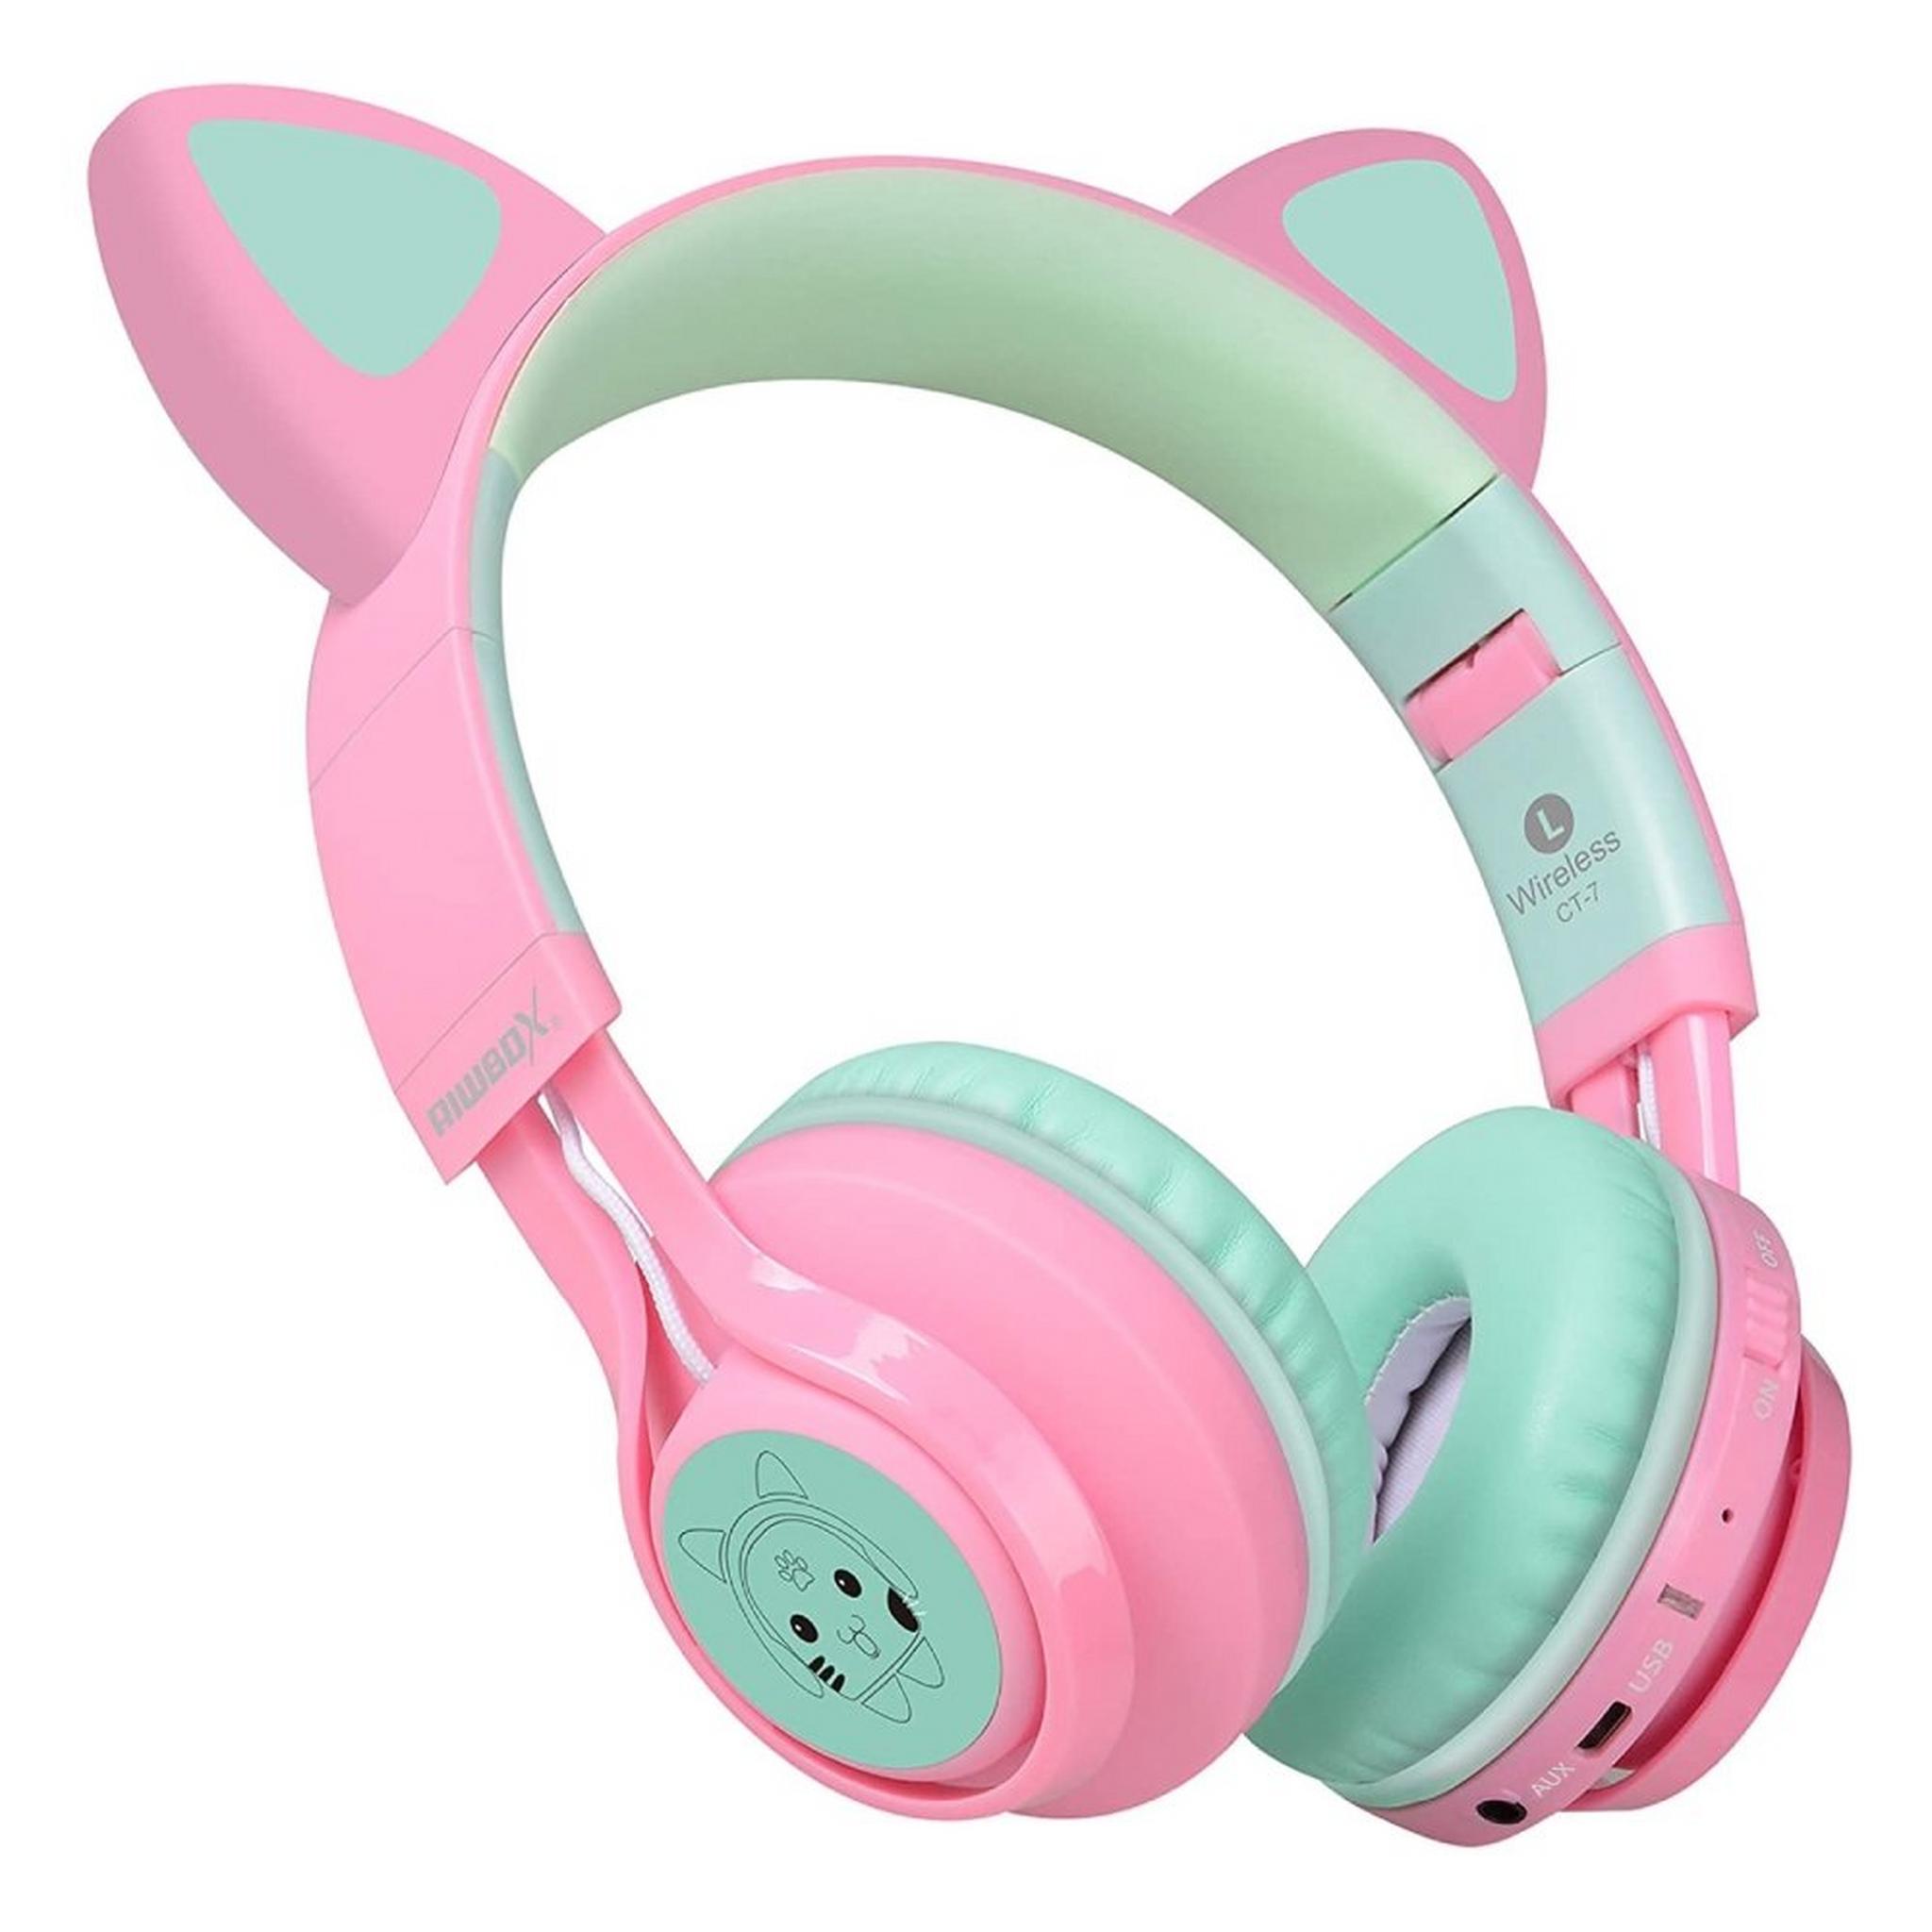 Riwbox Cat Ears Kids Bluetooth Headphones - Pink/Green